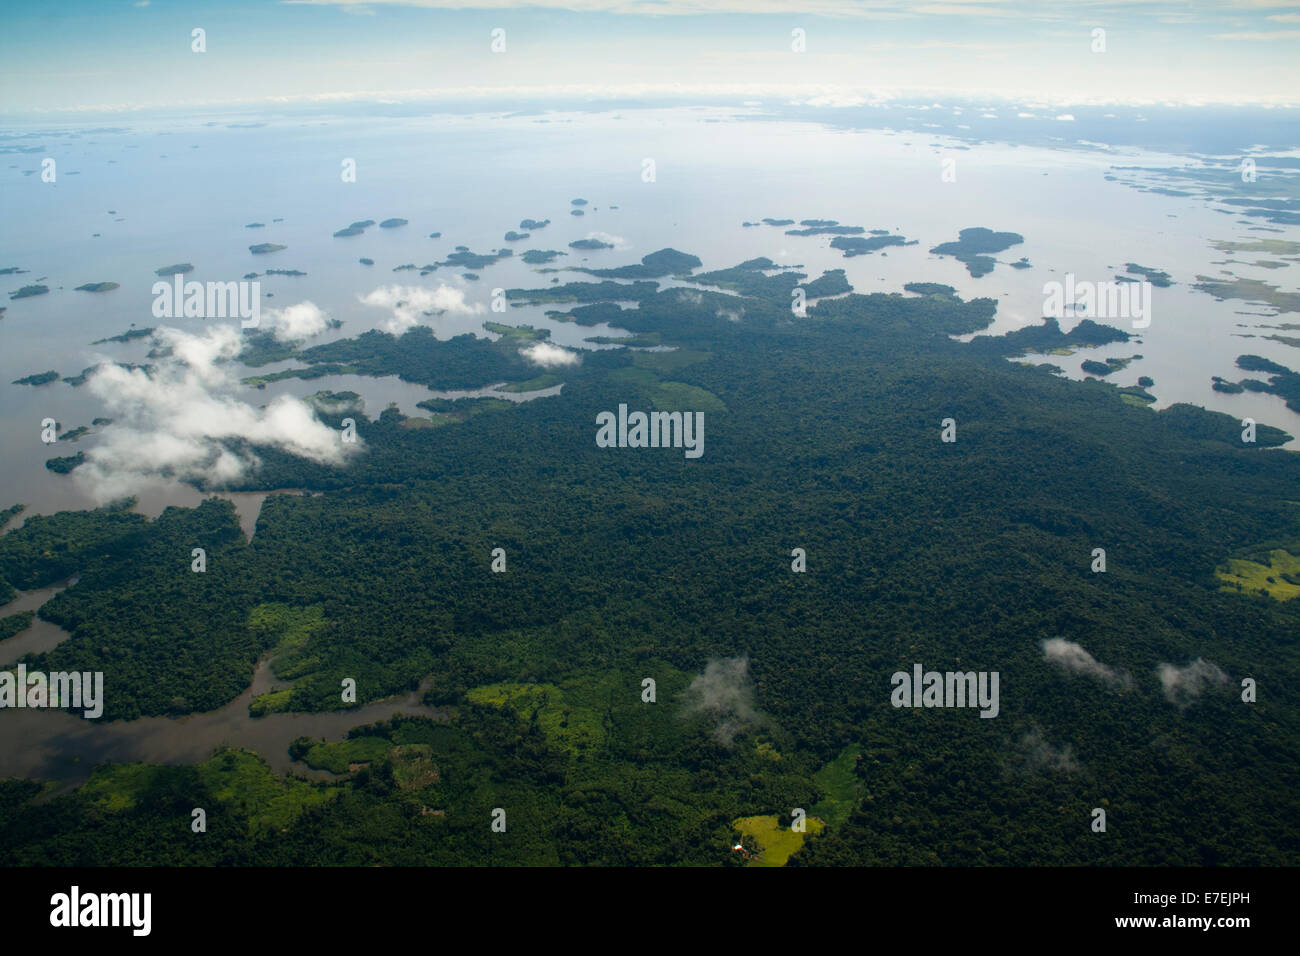 Amazon river delta -Fotos und -Bildmaterial in hoher Auflösung – Alamy